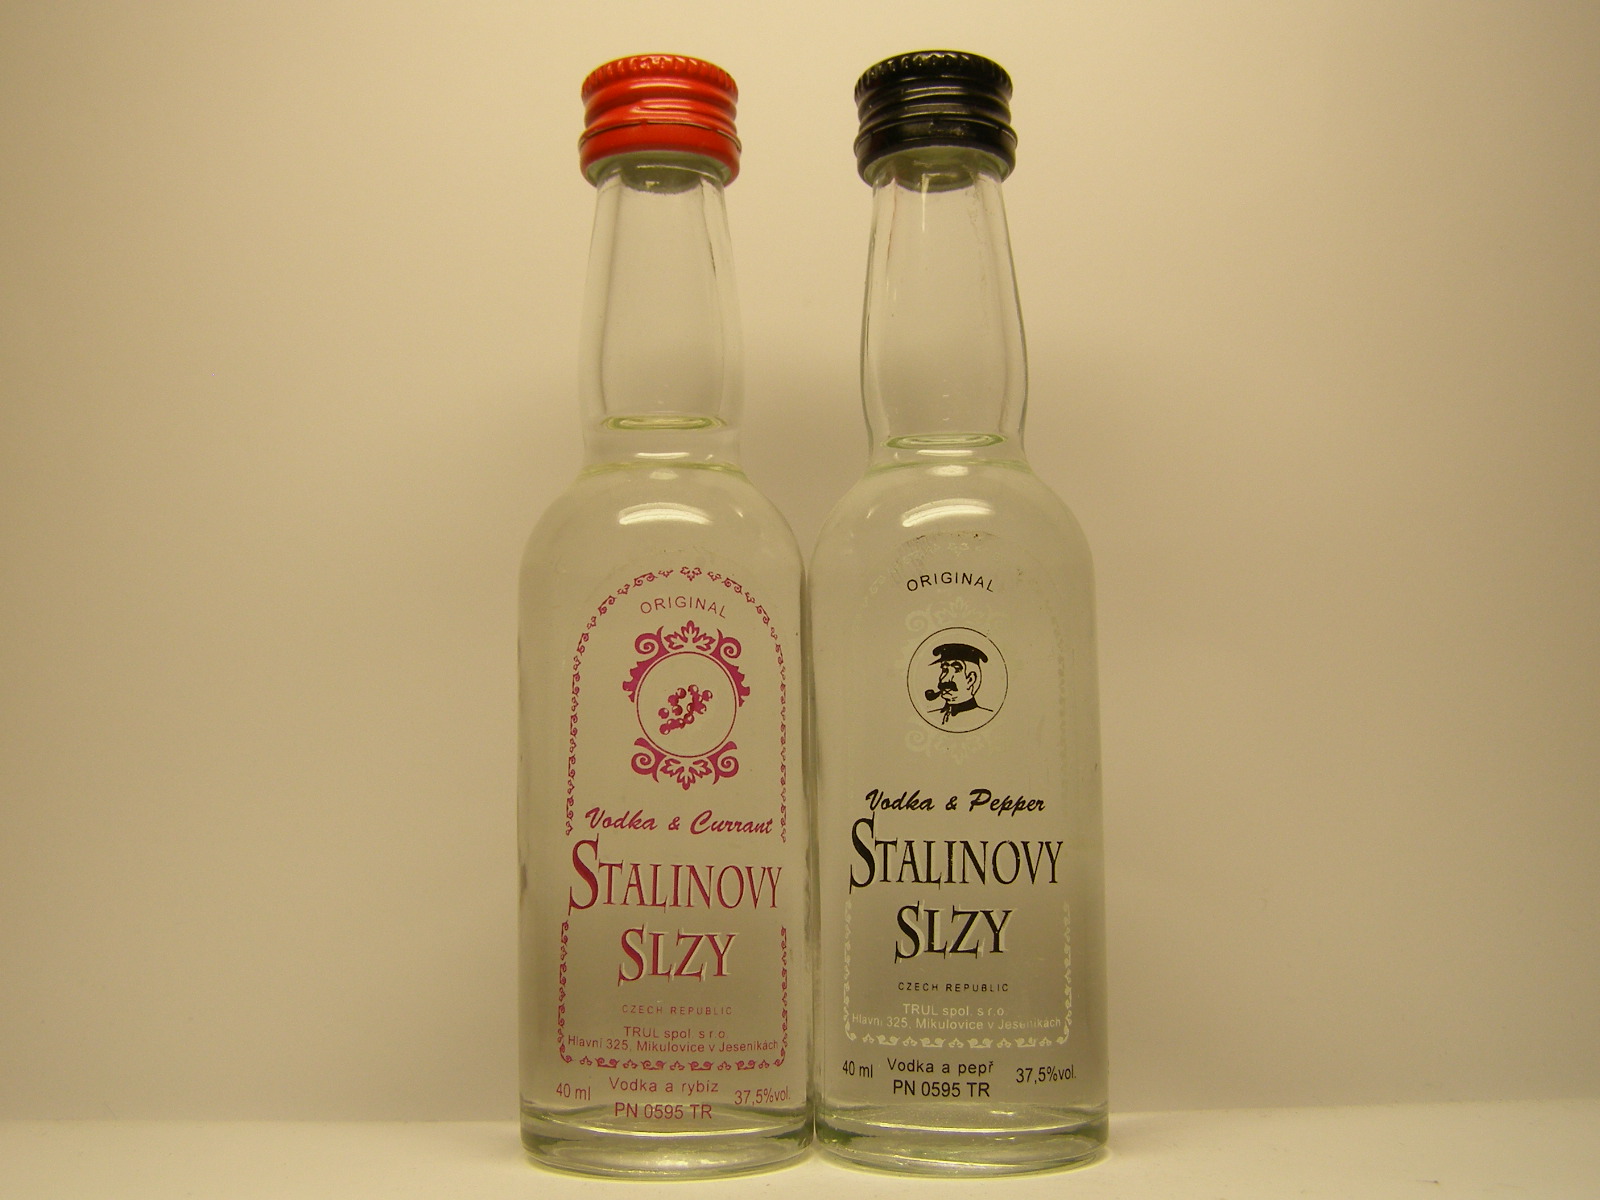 STALINOVY SLZY Vodka Currant - Vodka Pepper